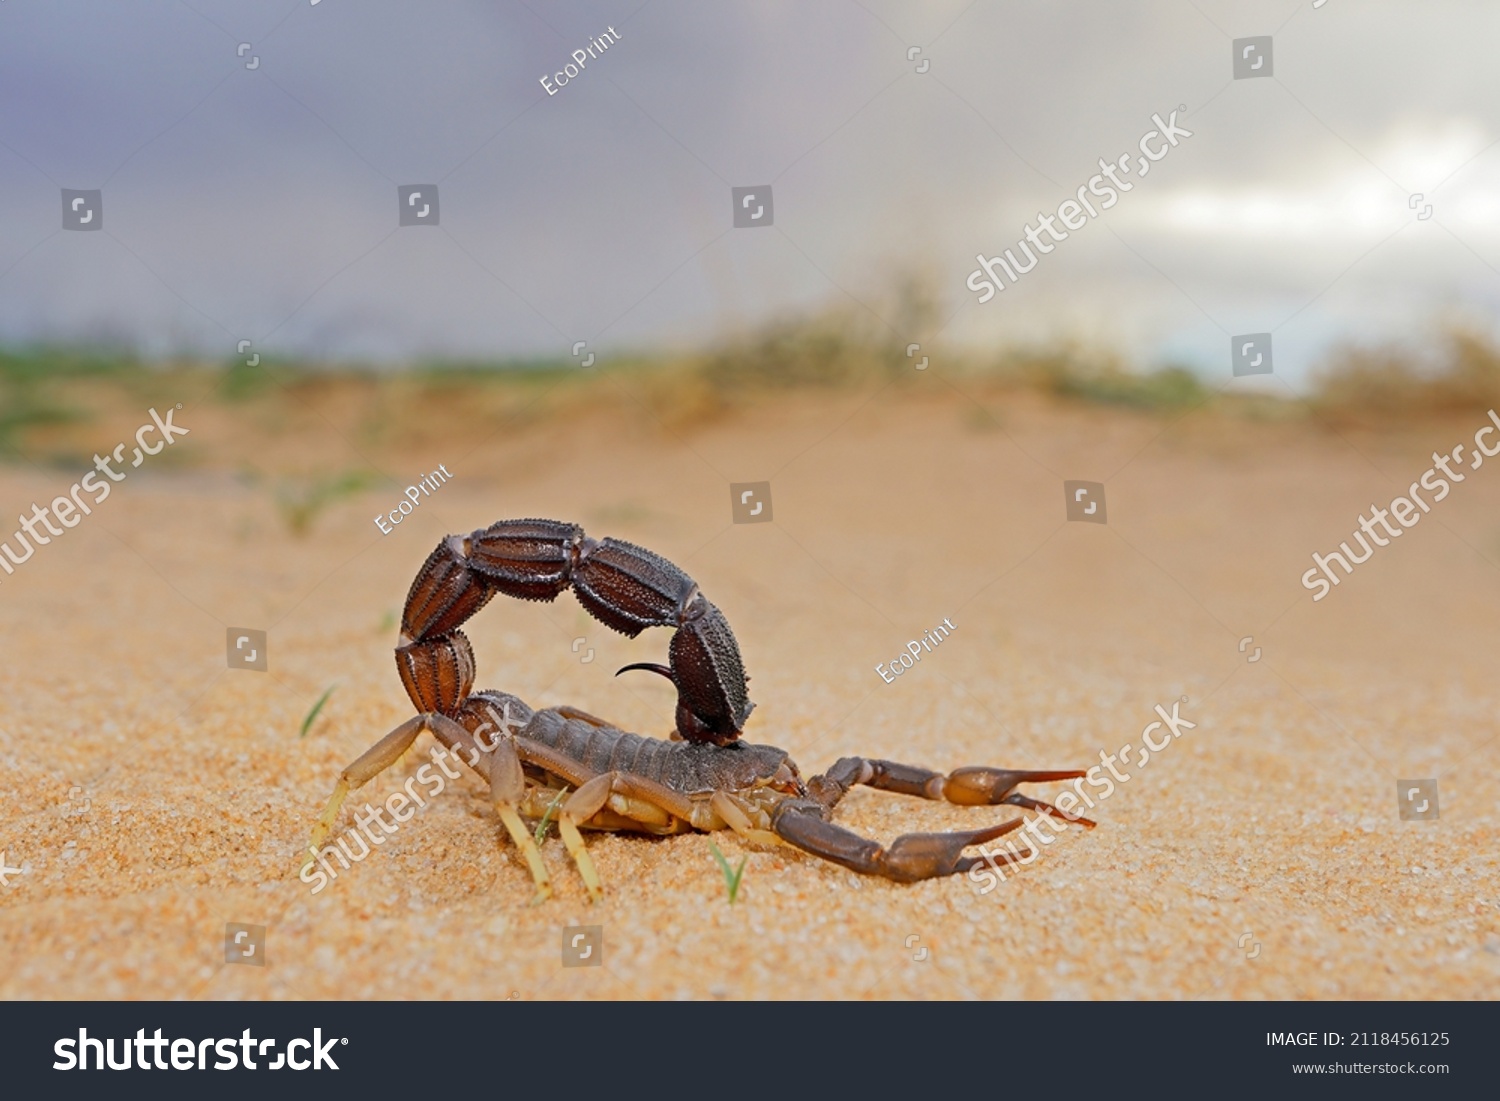 Granulated thick-tailed scorpion (Parabuthus granulatus), Kalahari desert, South Africa 
 #2118456125